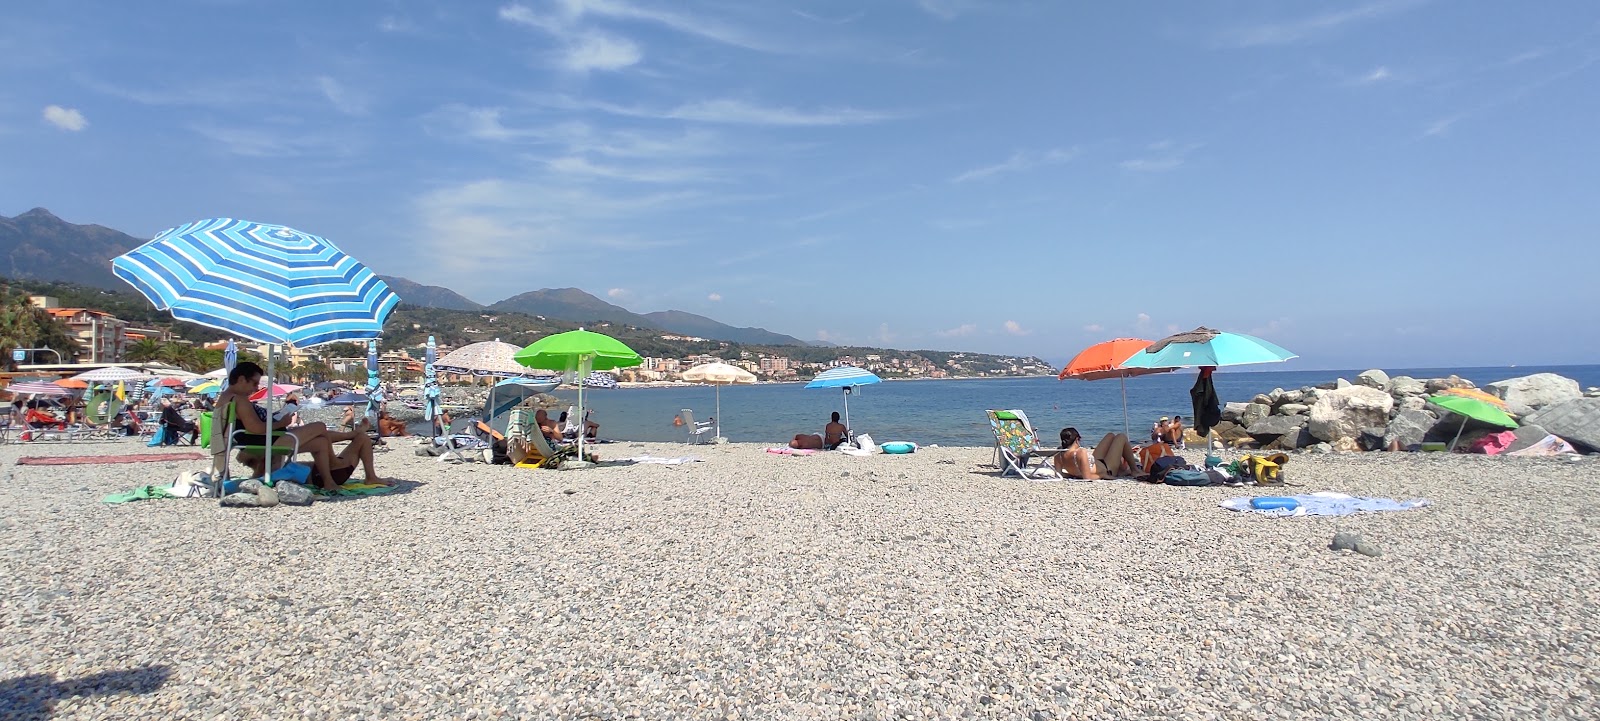 Foto av Spiaggia Libera Carretta Cogoleto med rymlig strand